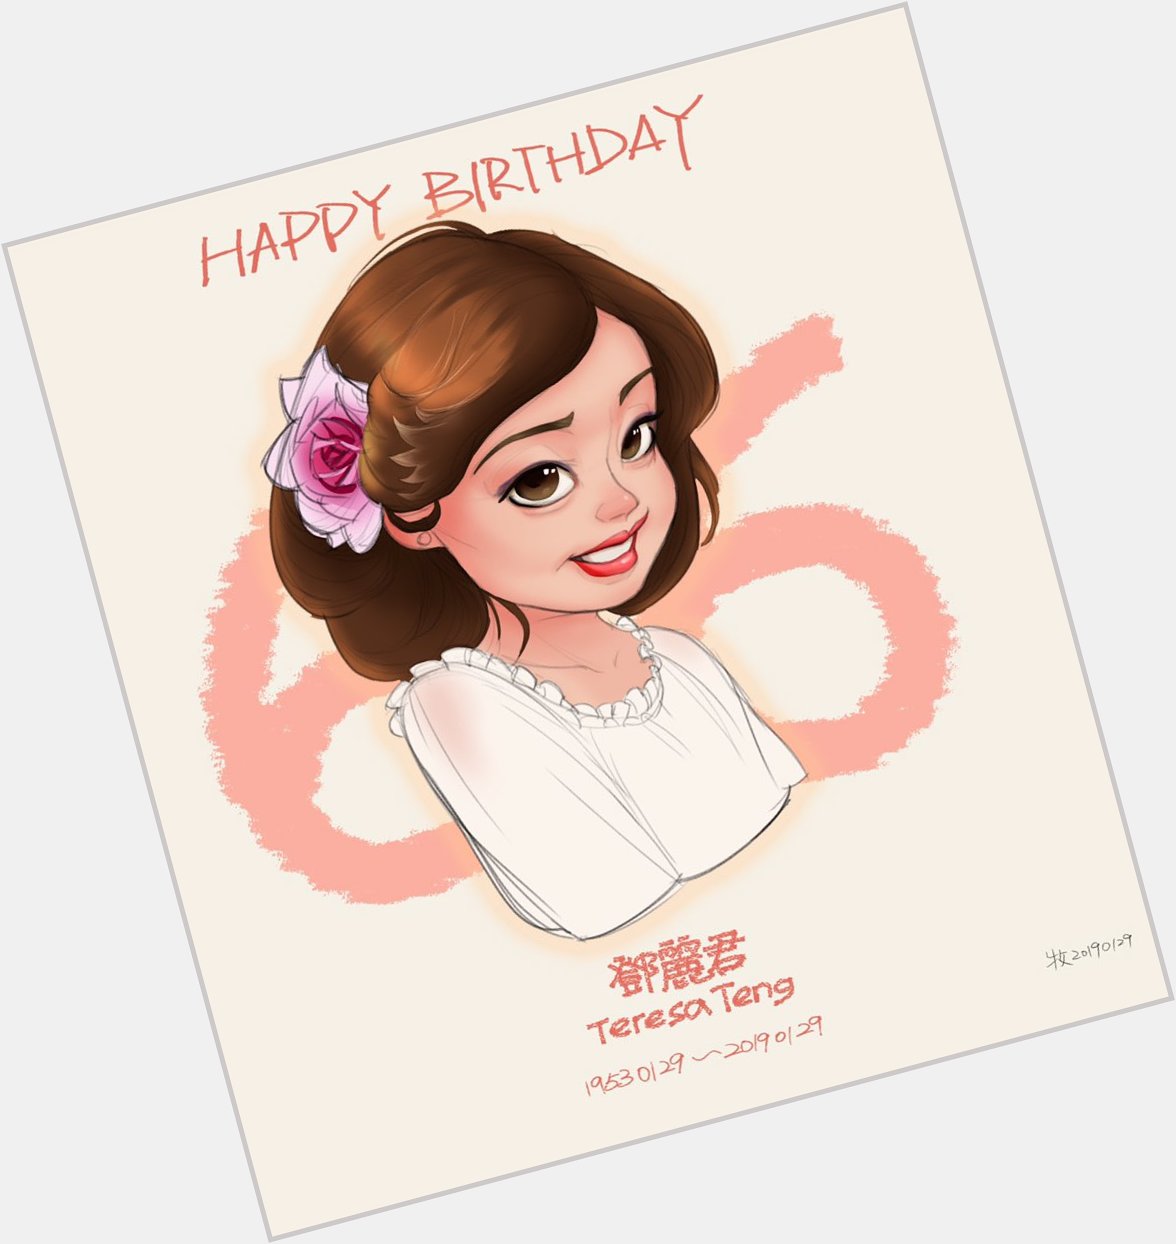                         Happy Birthday Teresa Teng 